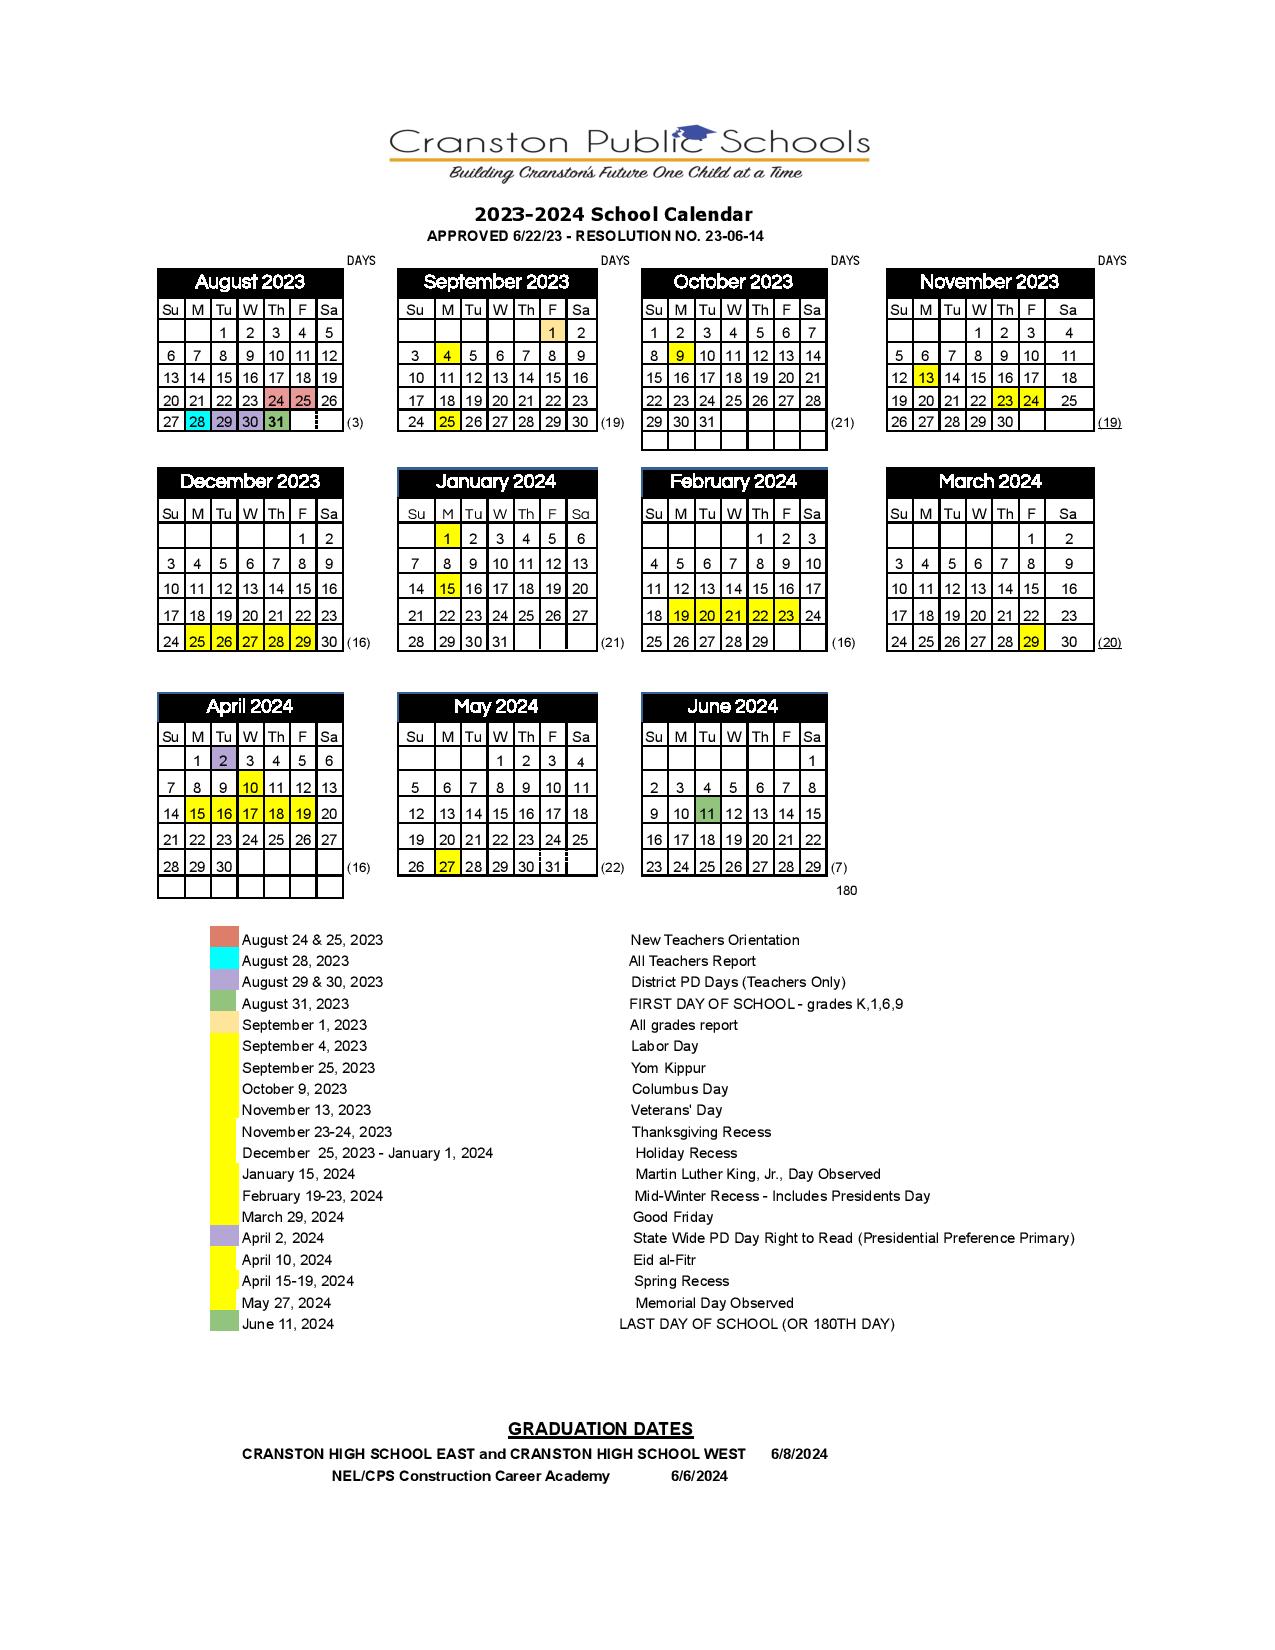 Cranston Public Schools Calendar 20232024 in PDF